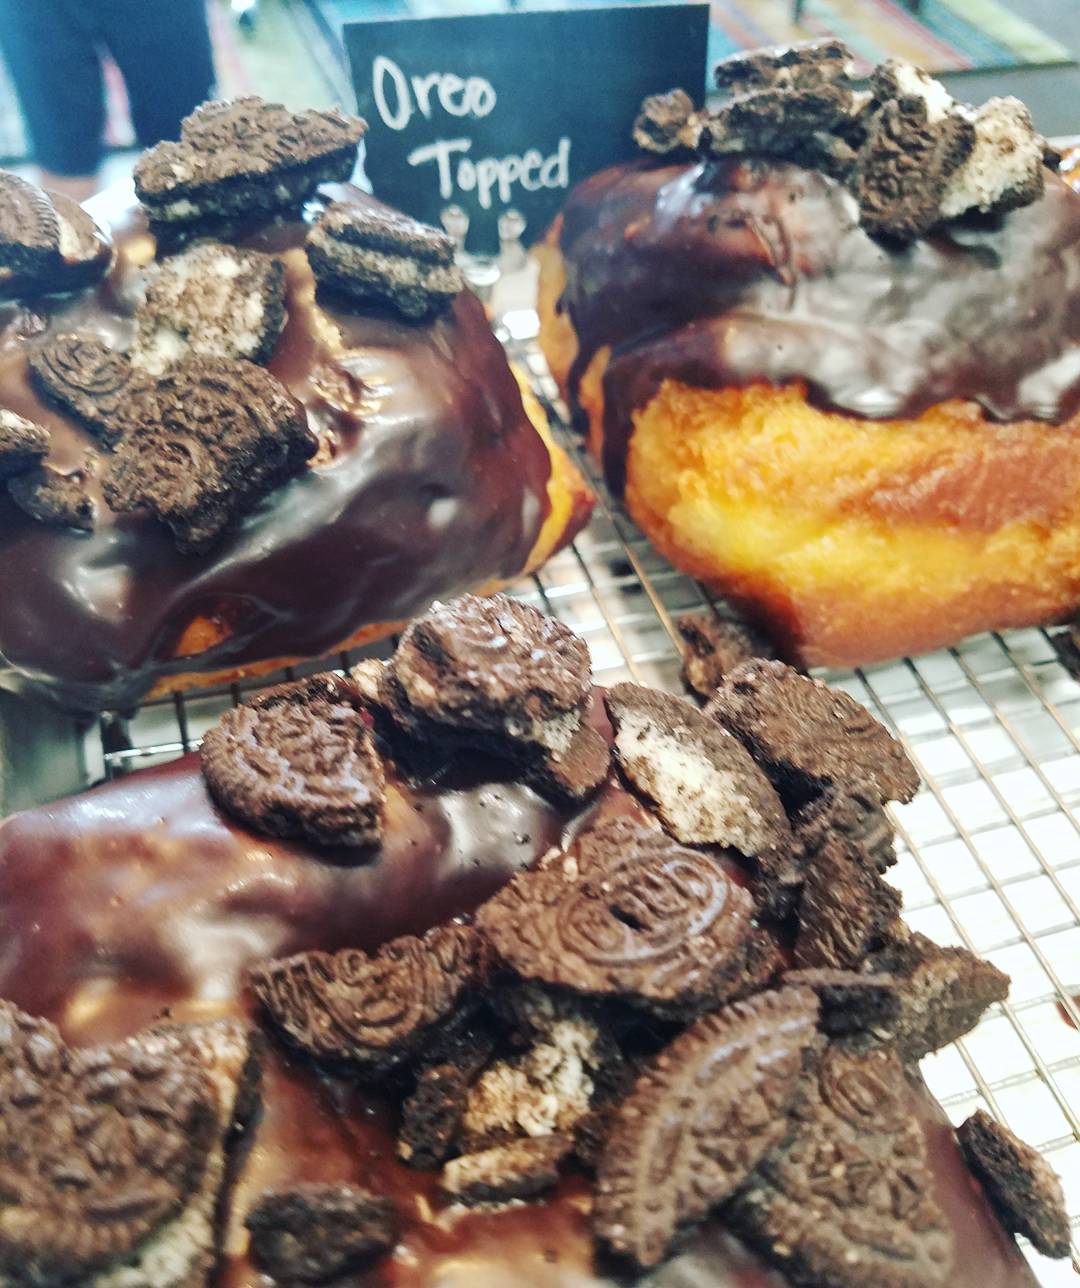 OREO Topped!!! Ahhh YES!!! 😍😍😍😍😍😍😍😍😍😍😍😍😍😍😍😍😍😍😍😍 @bellekitchenokc @bellekitchendd #doughnut #doughnuts #donut #donuts #okc #fresh #real #handmade #eeeeeats #f52grams #instagram #warm #bonappetit #buzzfeed #travelchannel #keepitlocalok #huffpostgram #huffposttaste #zagat #bellekitchen #keepitlocalok #saveur #food #foodie #insta #pic #pretty #instagood #beautiful